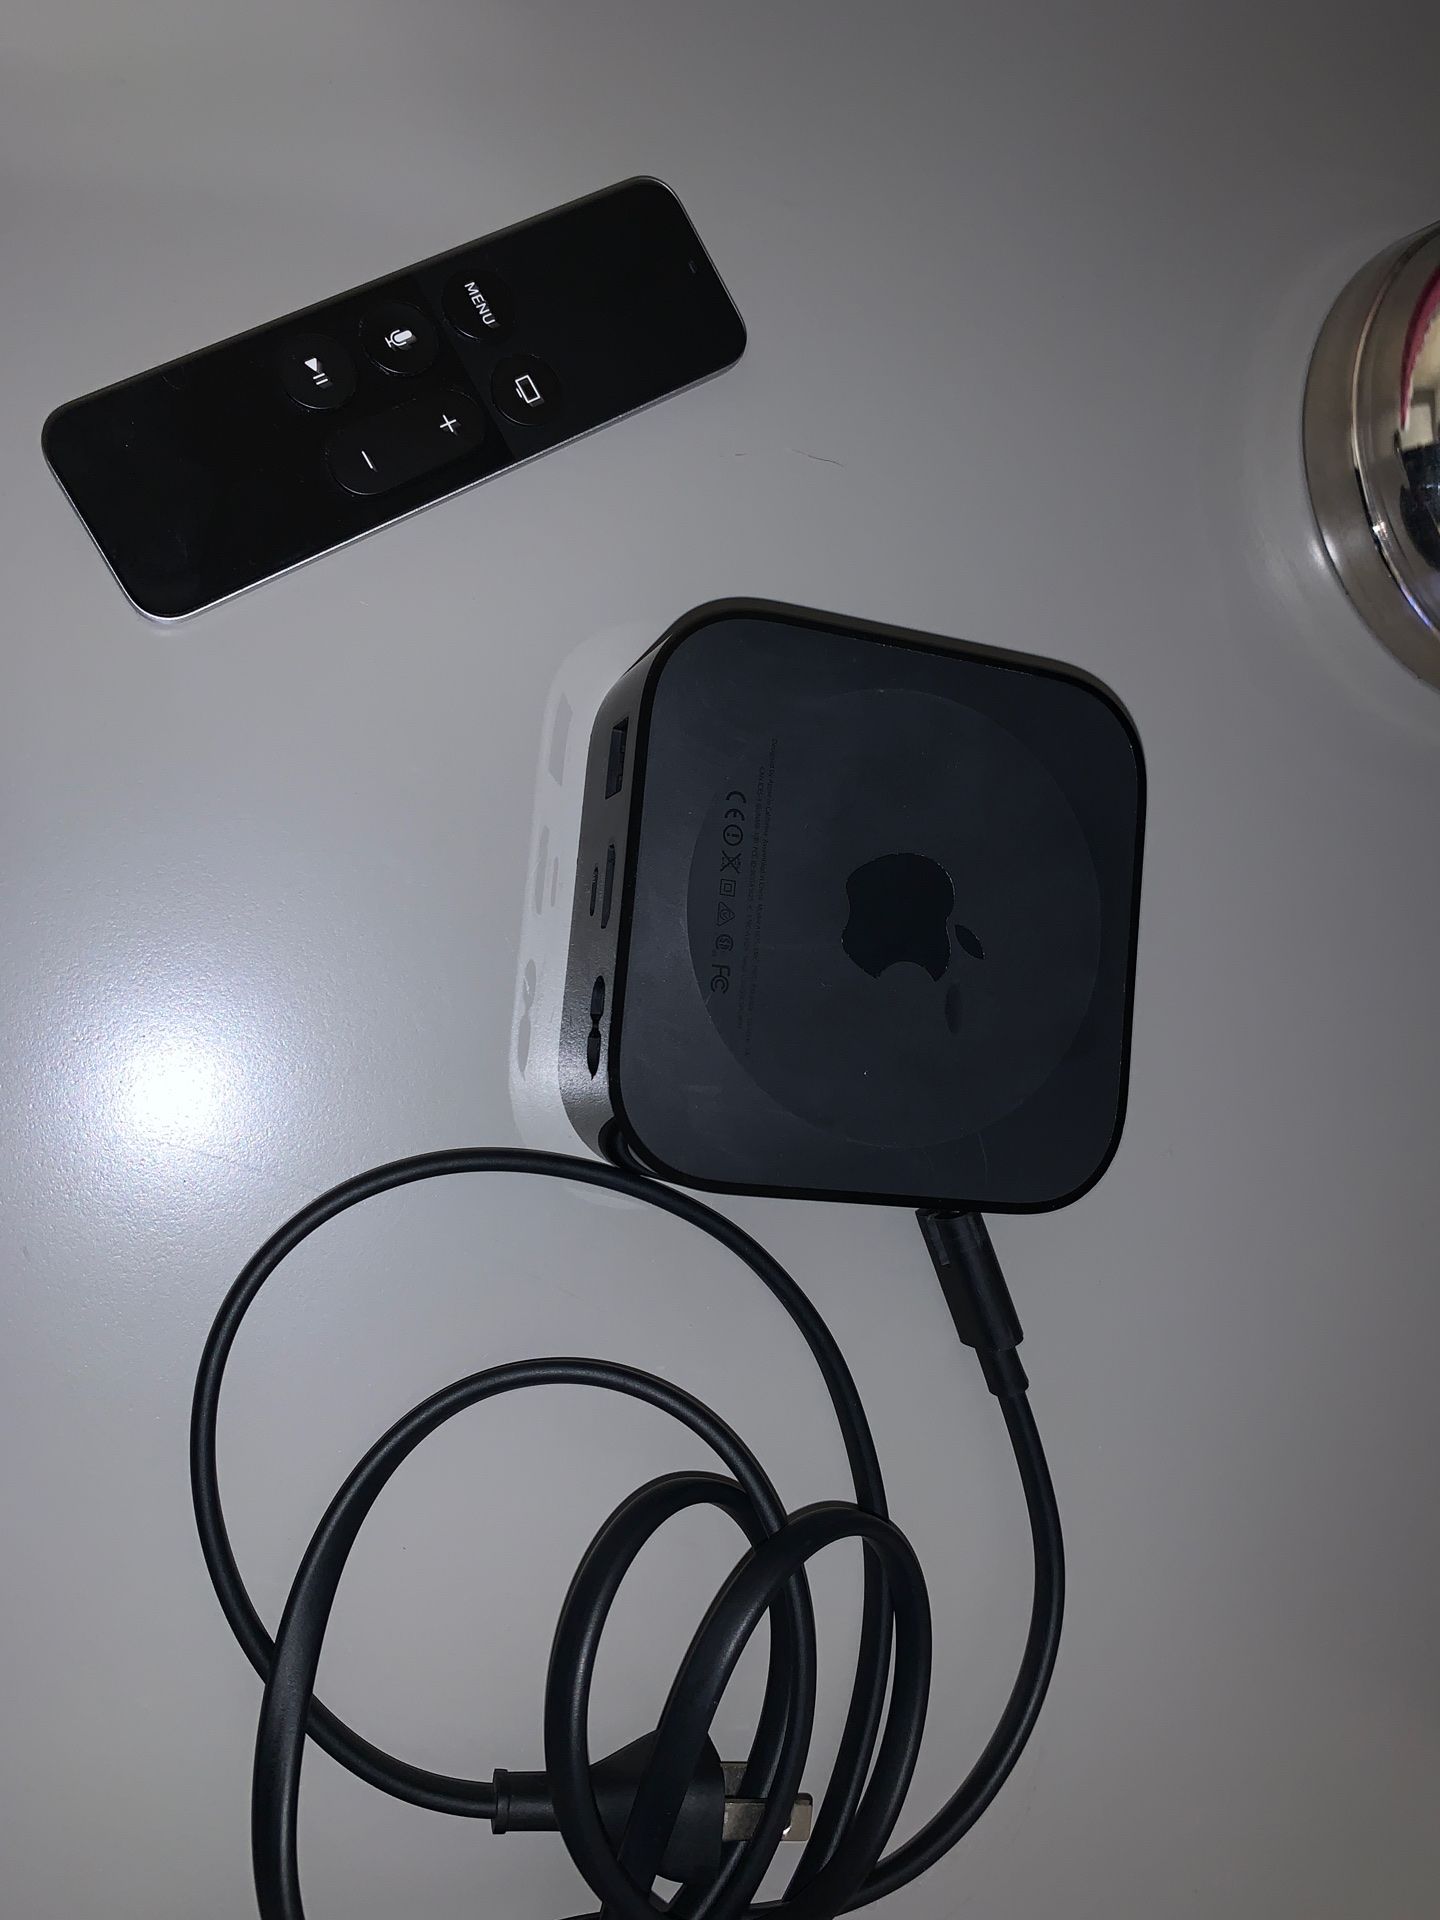 Apple TV (remote,plug,and console)